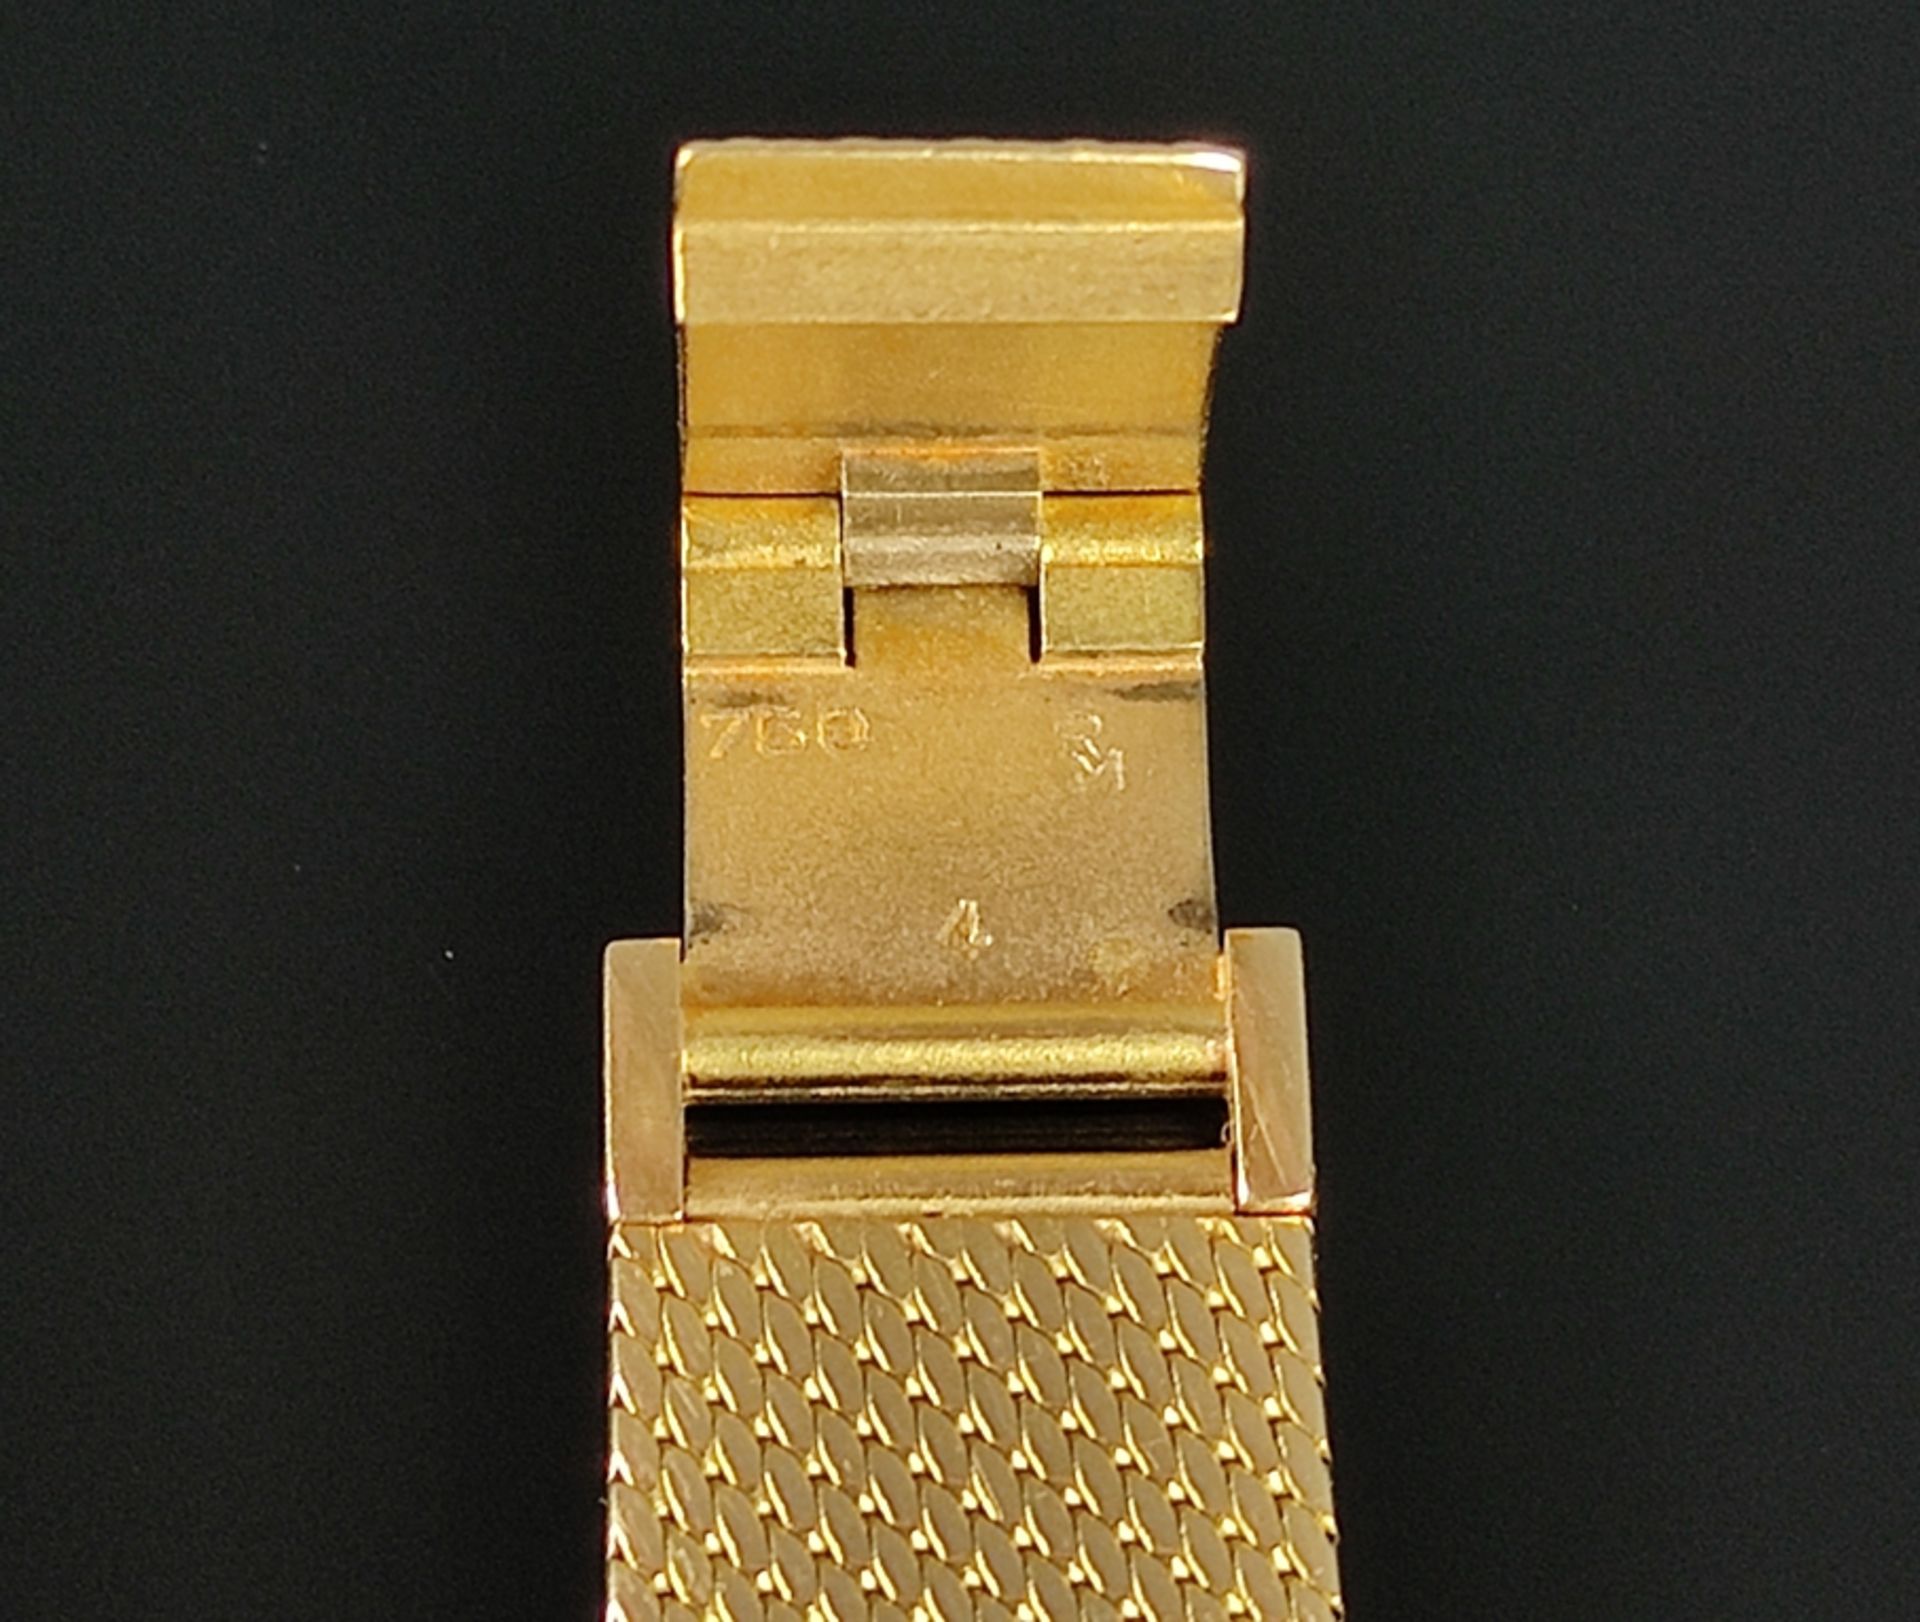 Wristwatch, Baum & Mercier, Geneve / Geneva, octagonal case dial with Roman numerals, 23.3x23.3mm,  - Image 5 of 5